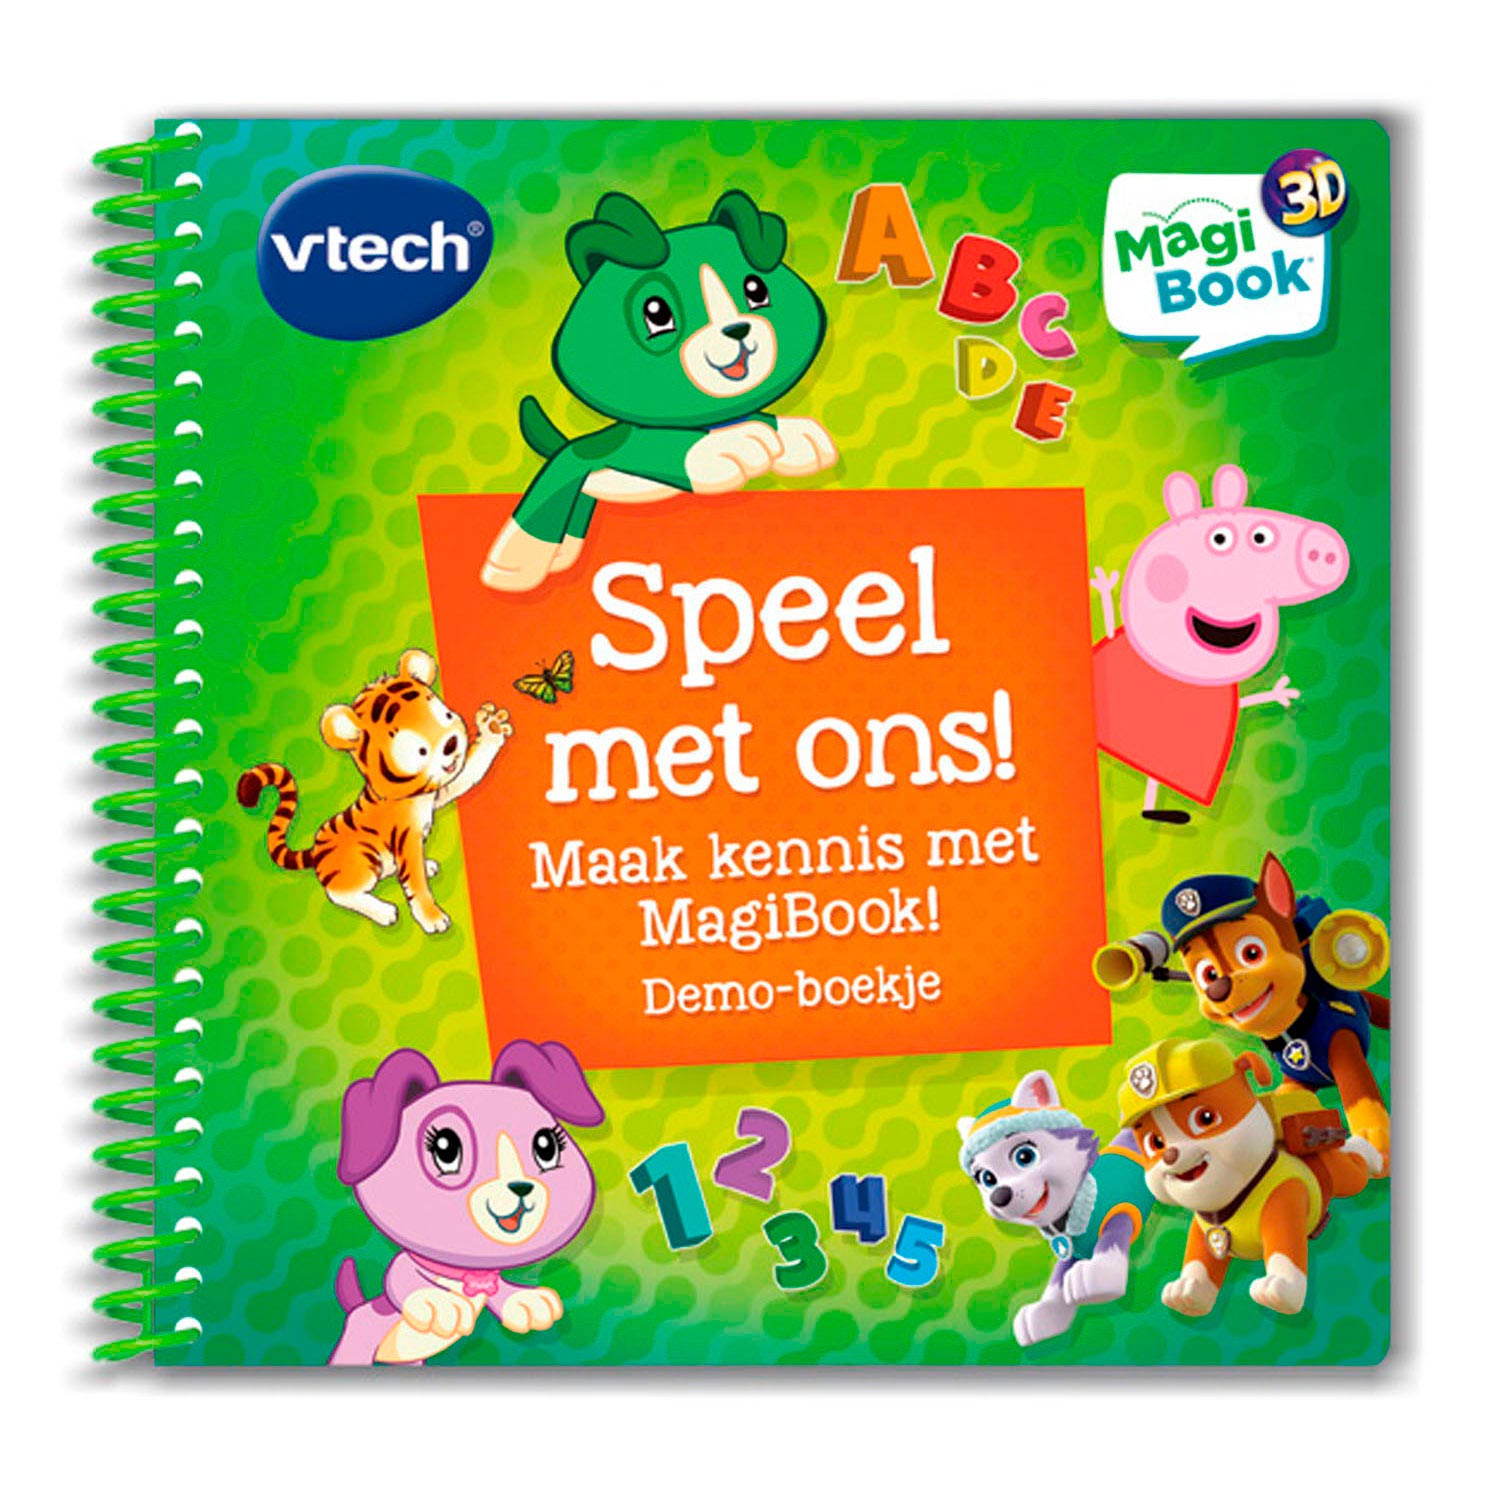 VTech MagiBook Bundle with Demo Book